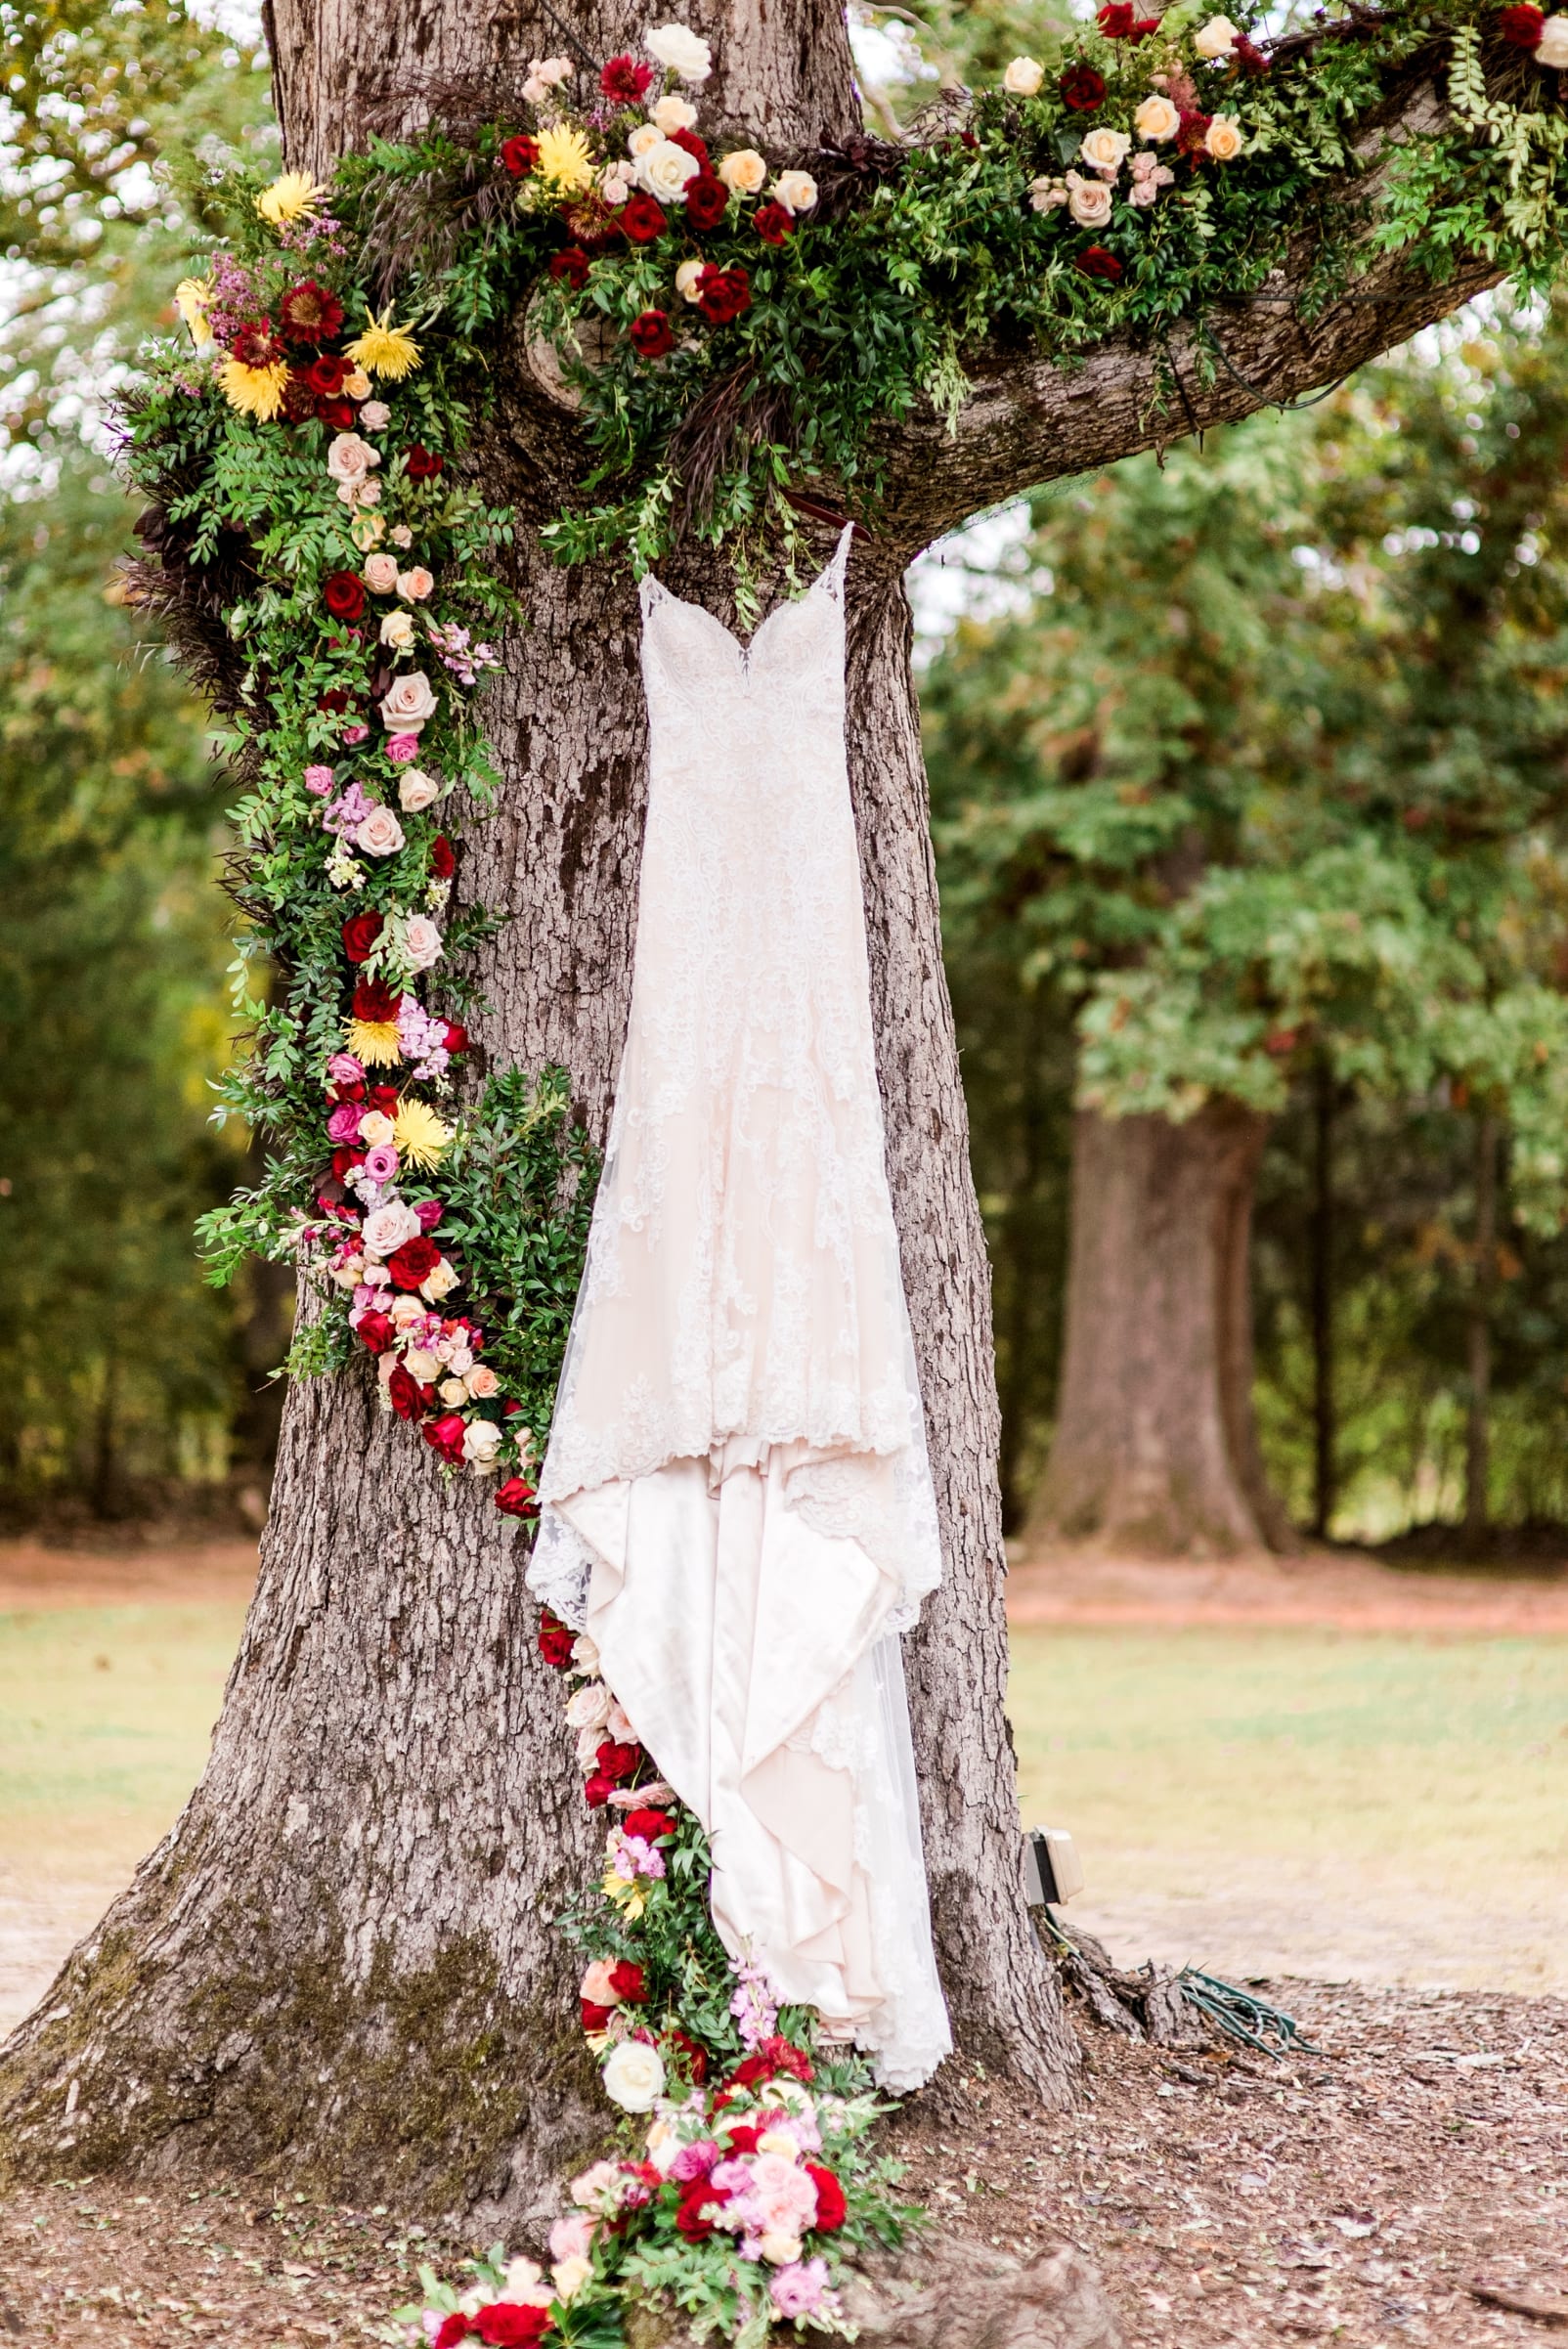 sutherland wake forest wedding photographer martina liana dress floral garland on tree photo